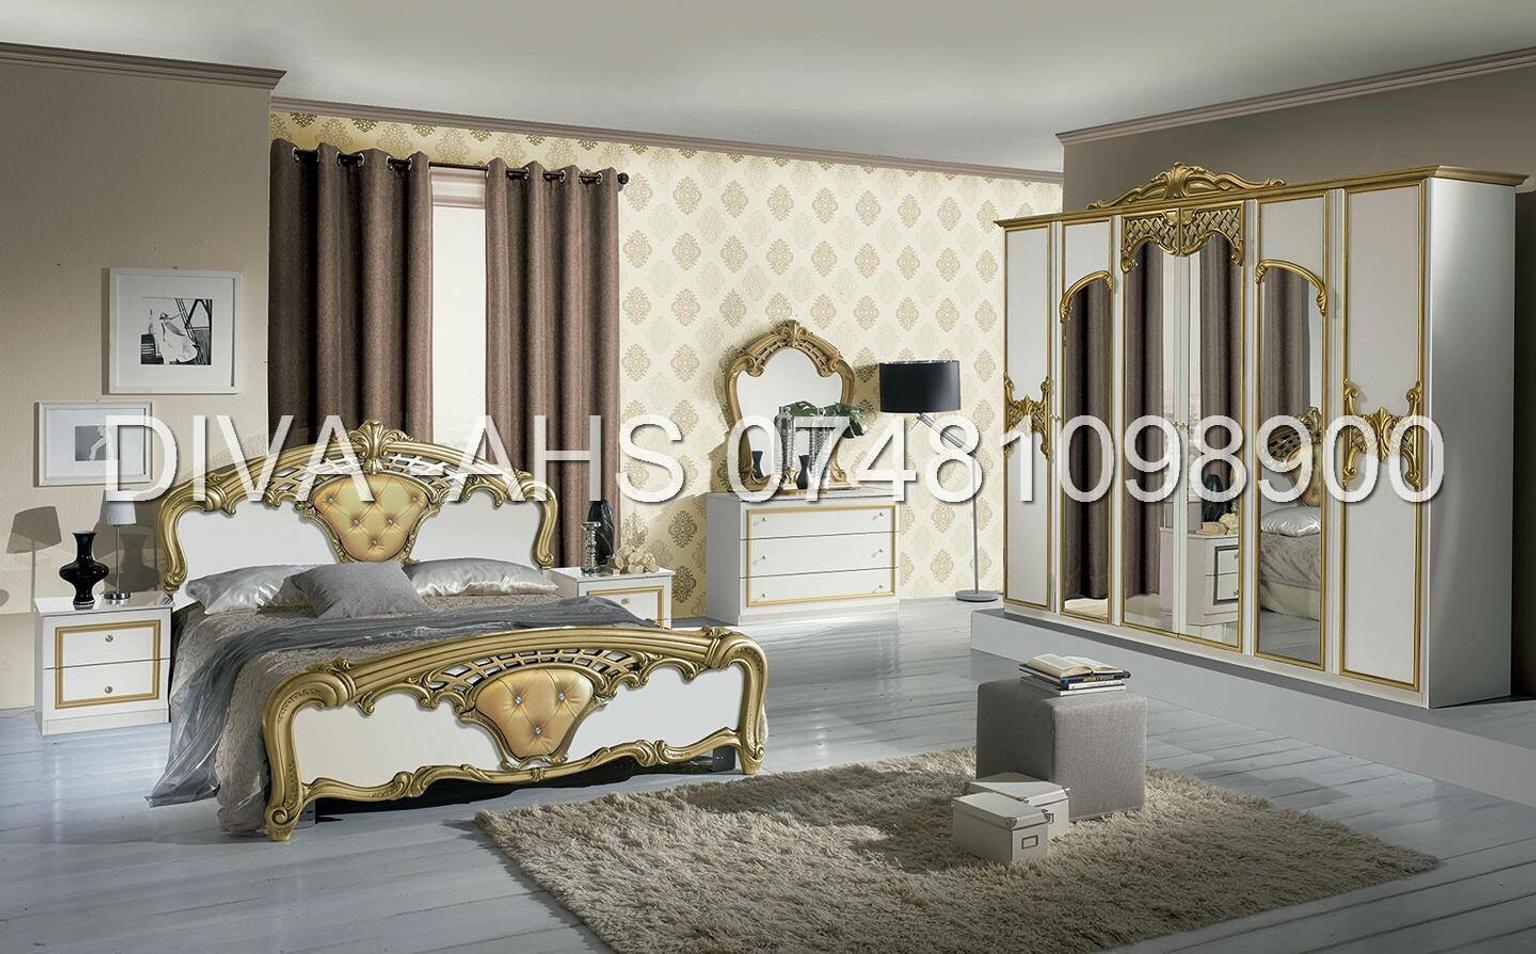 6 Psc Italian Bedroom Set Special Offer In Cr0 Croydon Fur 699 00